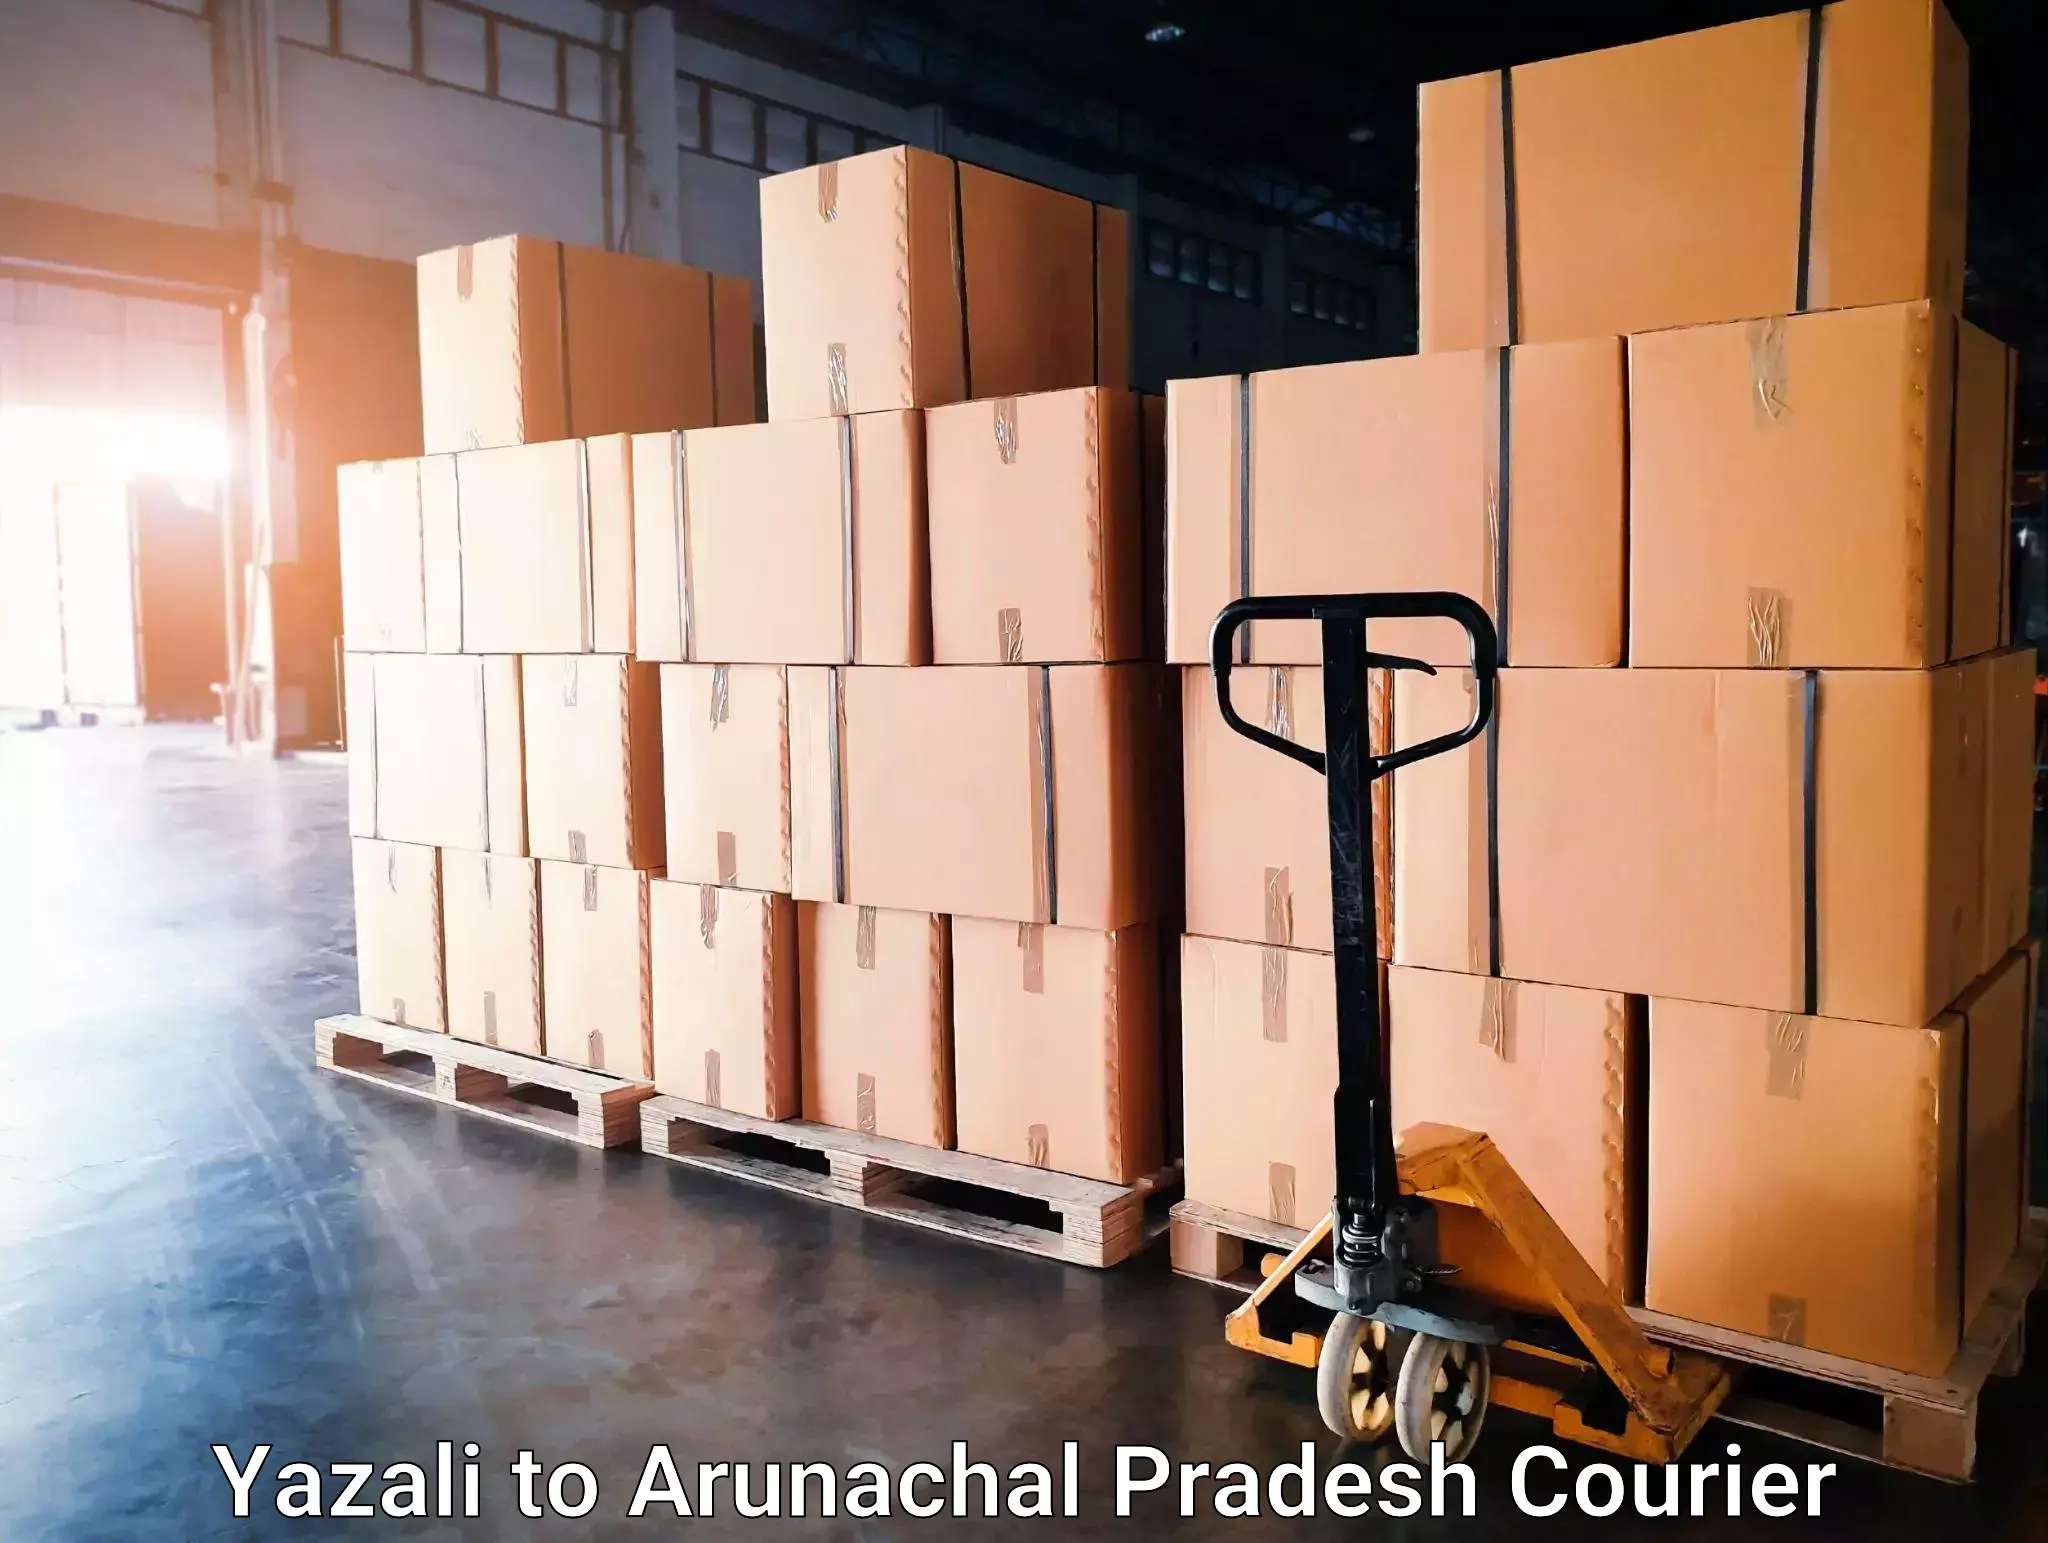 State-of-the-art courier technology Yazali to Yazali